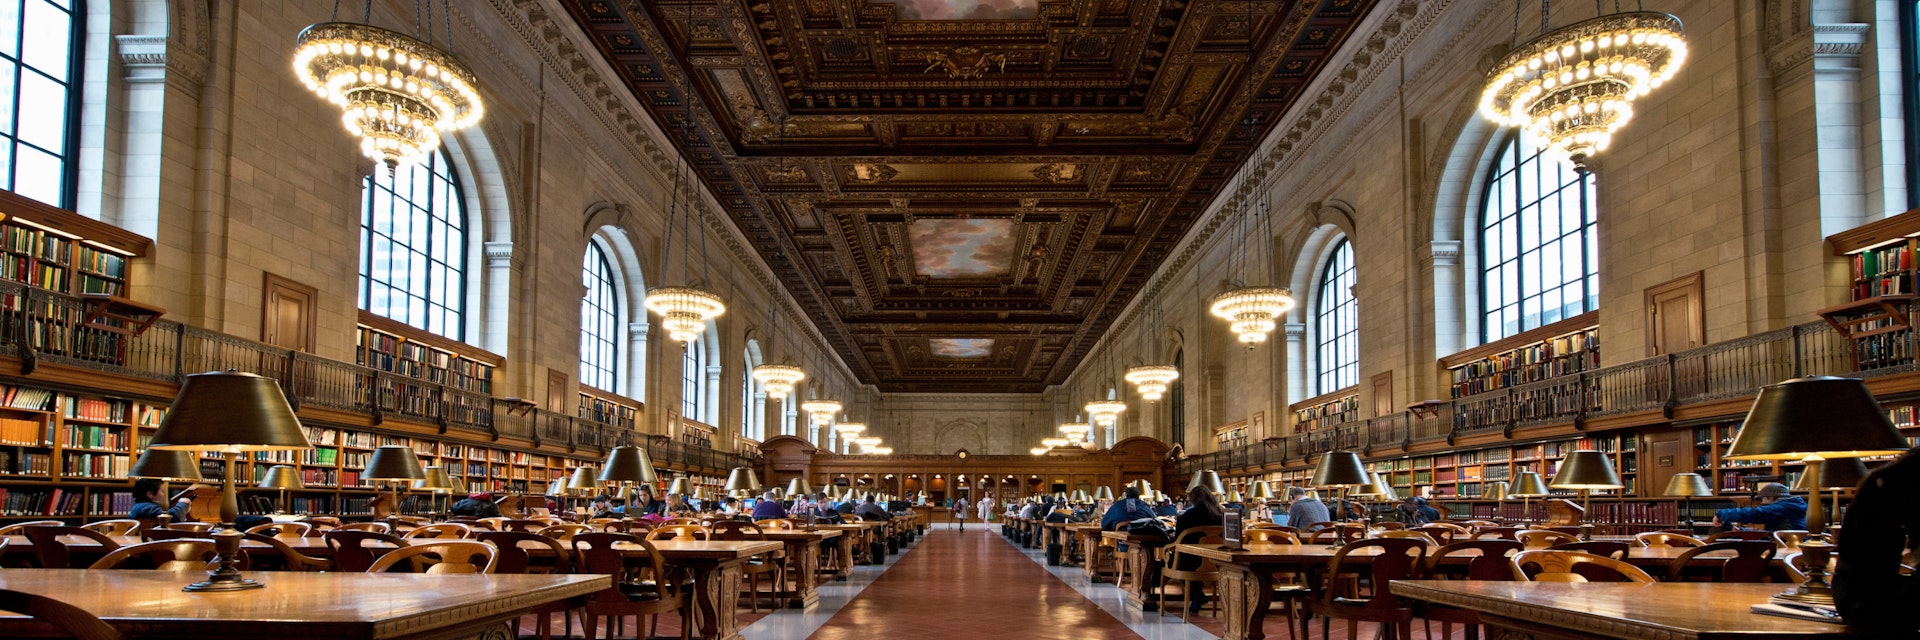 Interior of New York Public Library, Manhattan, New York City, USA